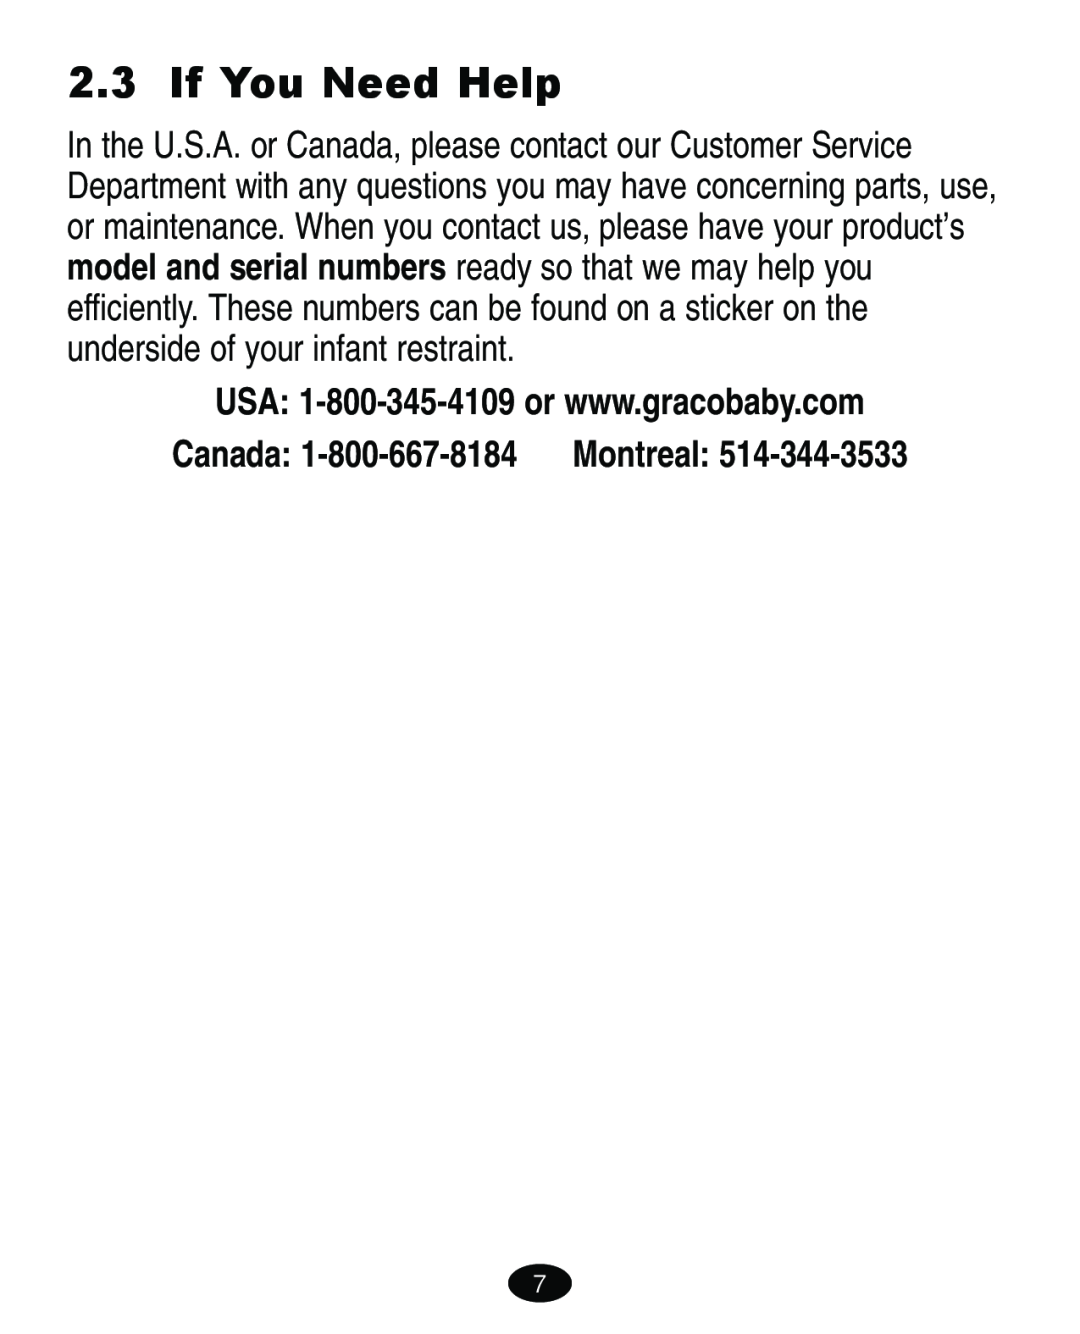 Graco ISPA108AB manual If You Need Help, Canada, Montreal 